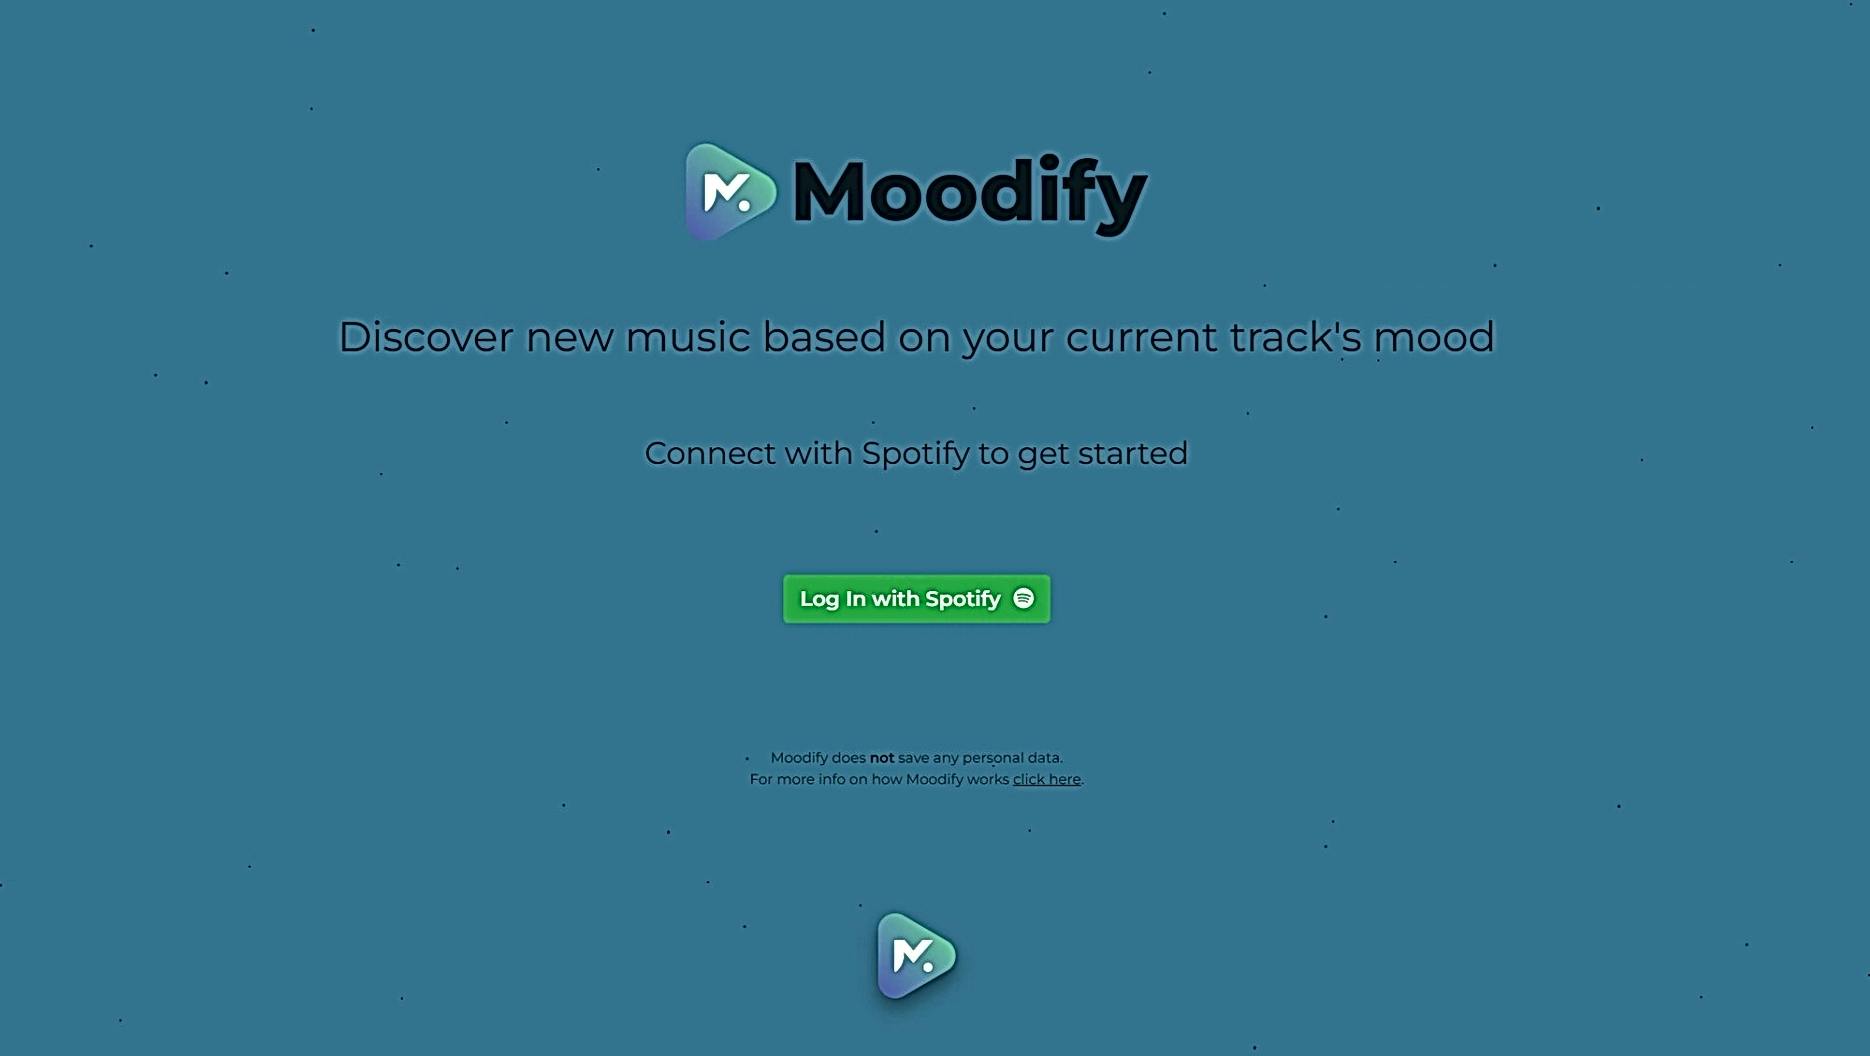 Moodify featured